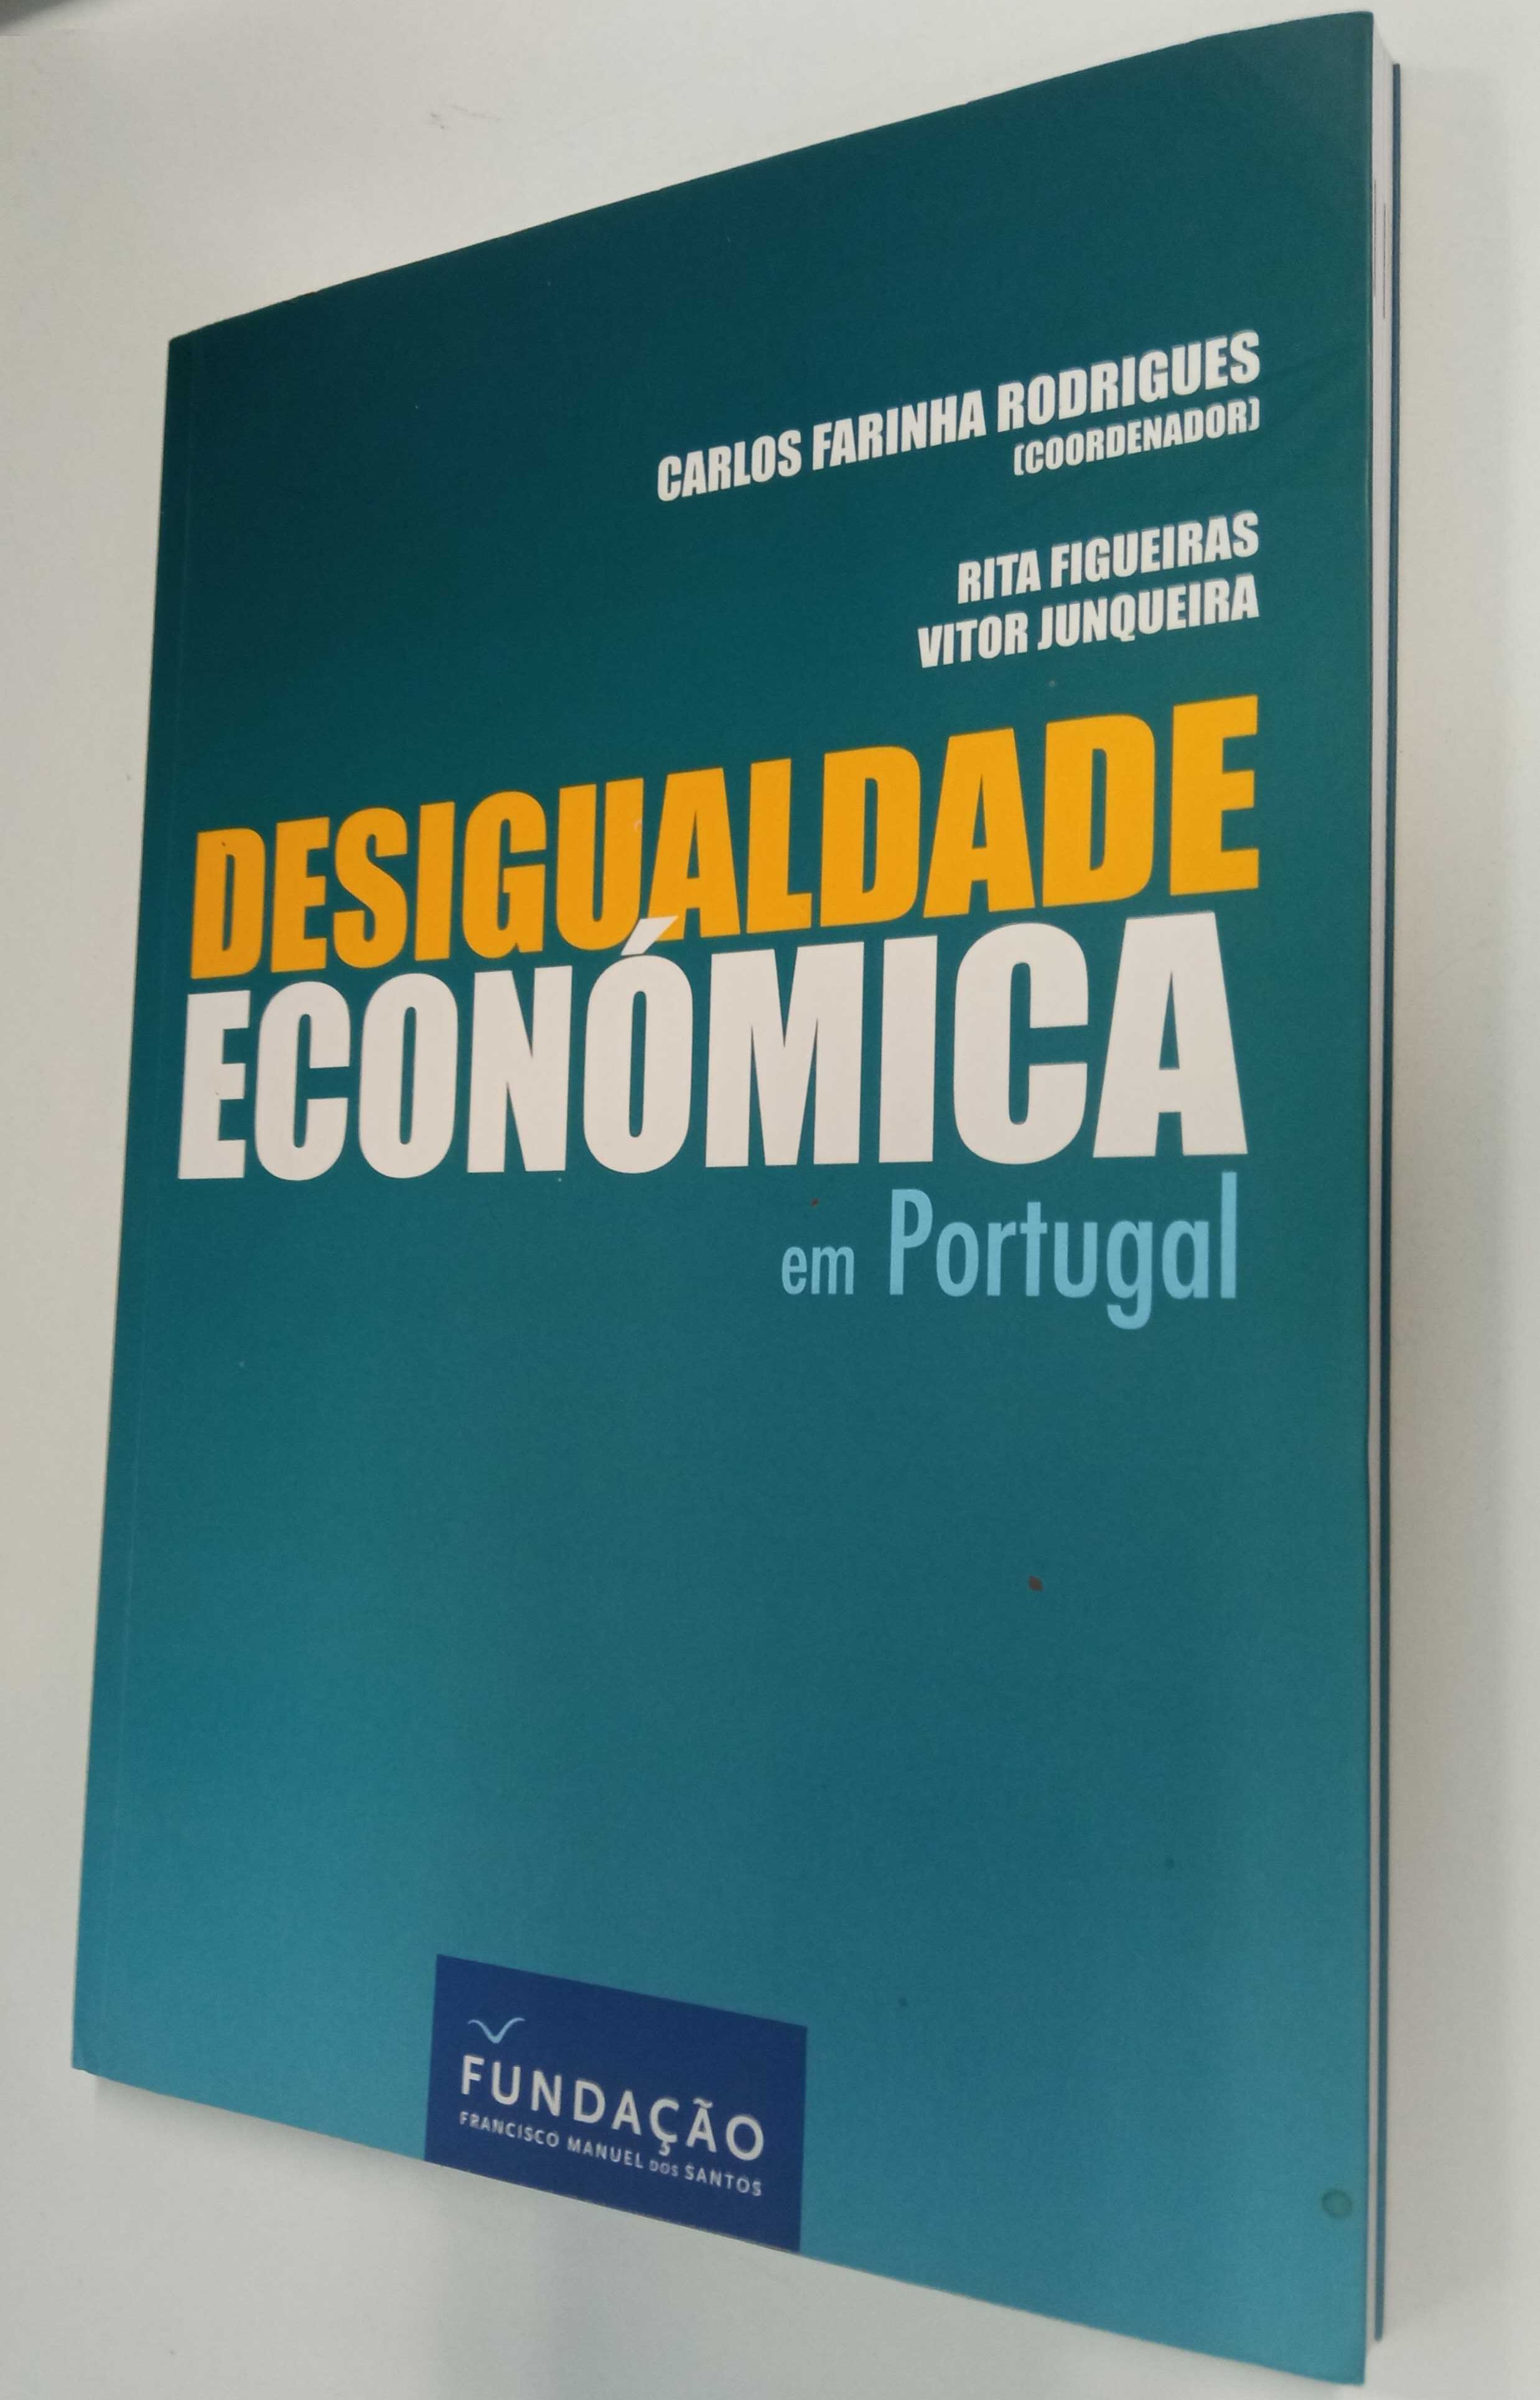 Desigualdade económica em Portugal, de Carlos Farinha Rodrigues